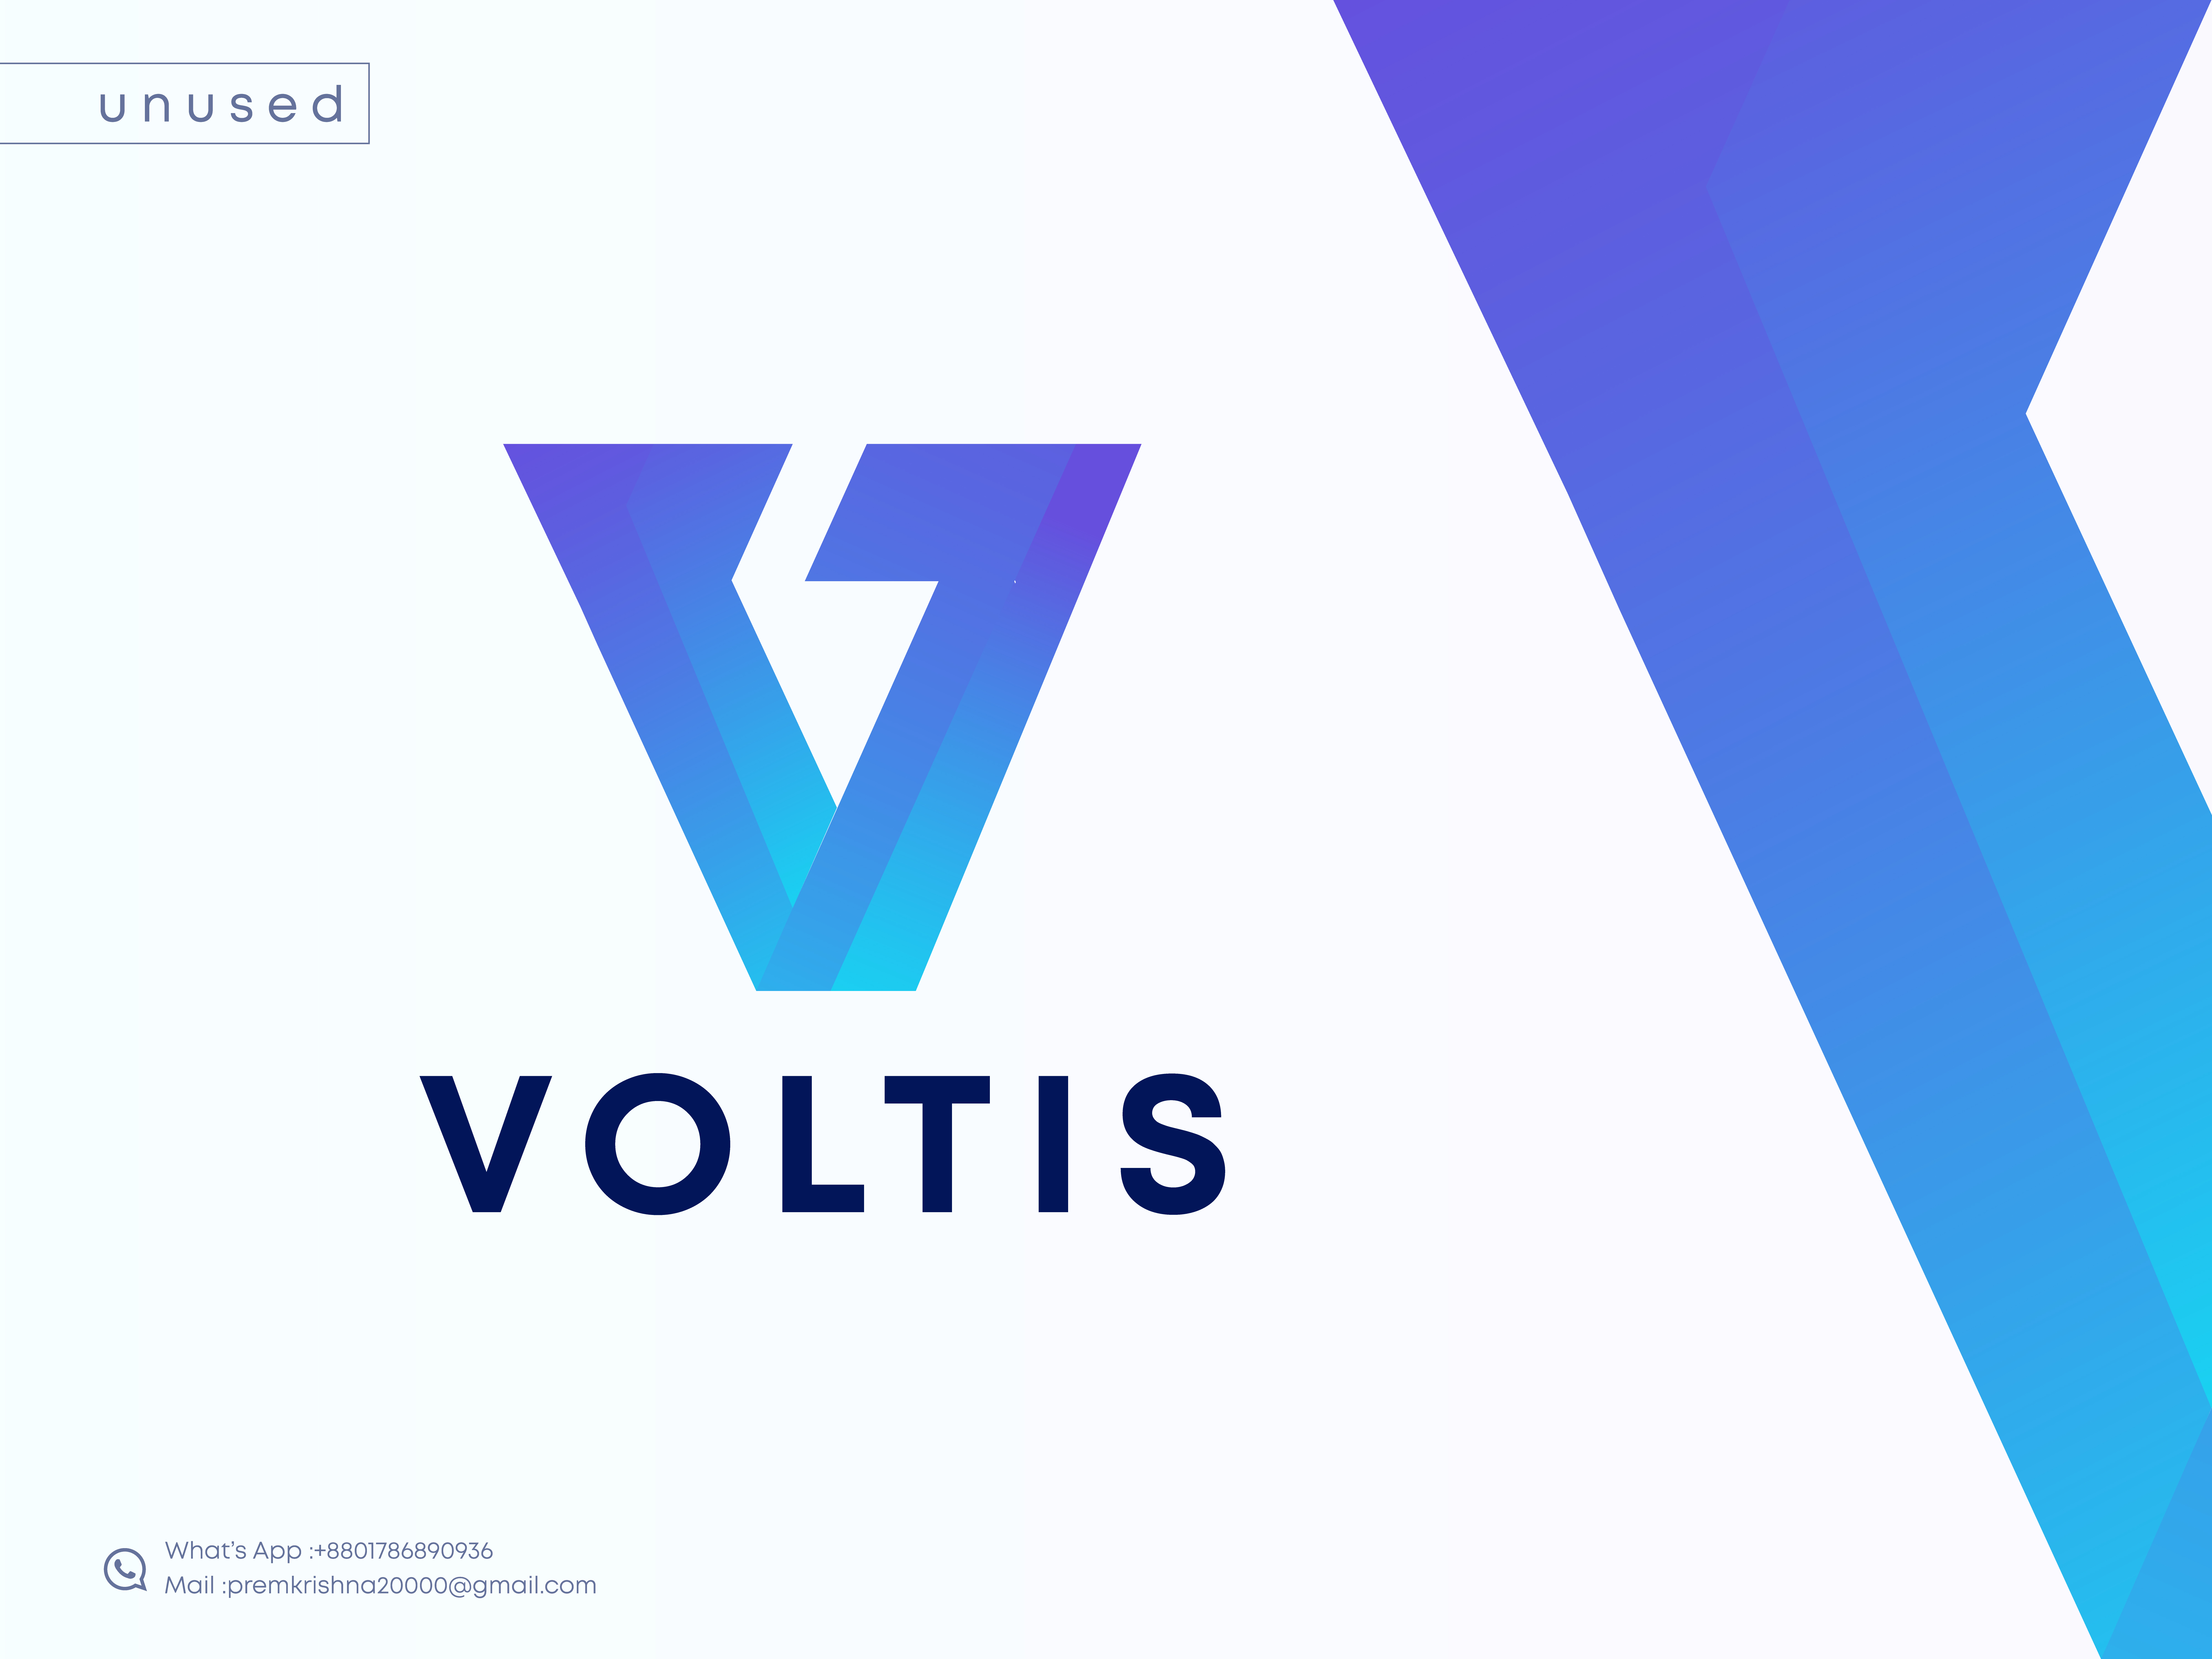 सीधी भर्ती Voltas कंपनी में | Job in Voltas Company | Voltas Company Mein  Job | Latest Job Noida - YouTube